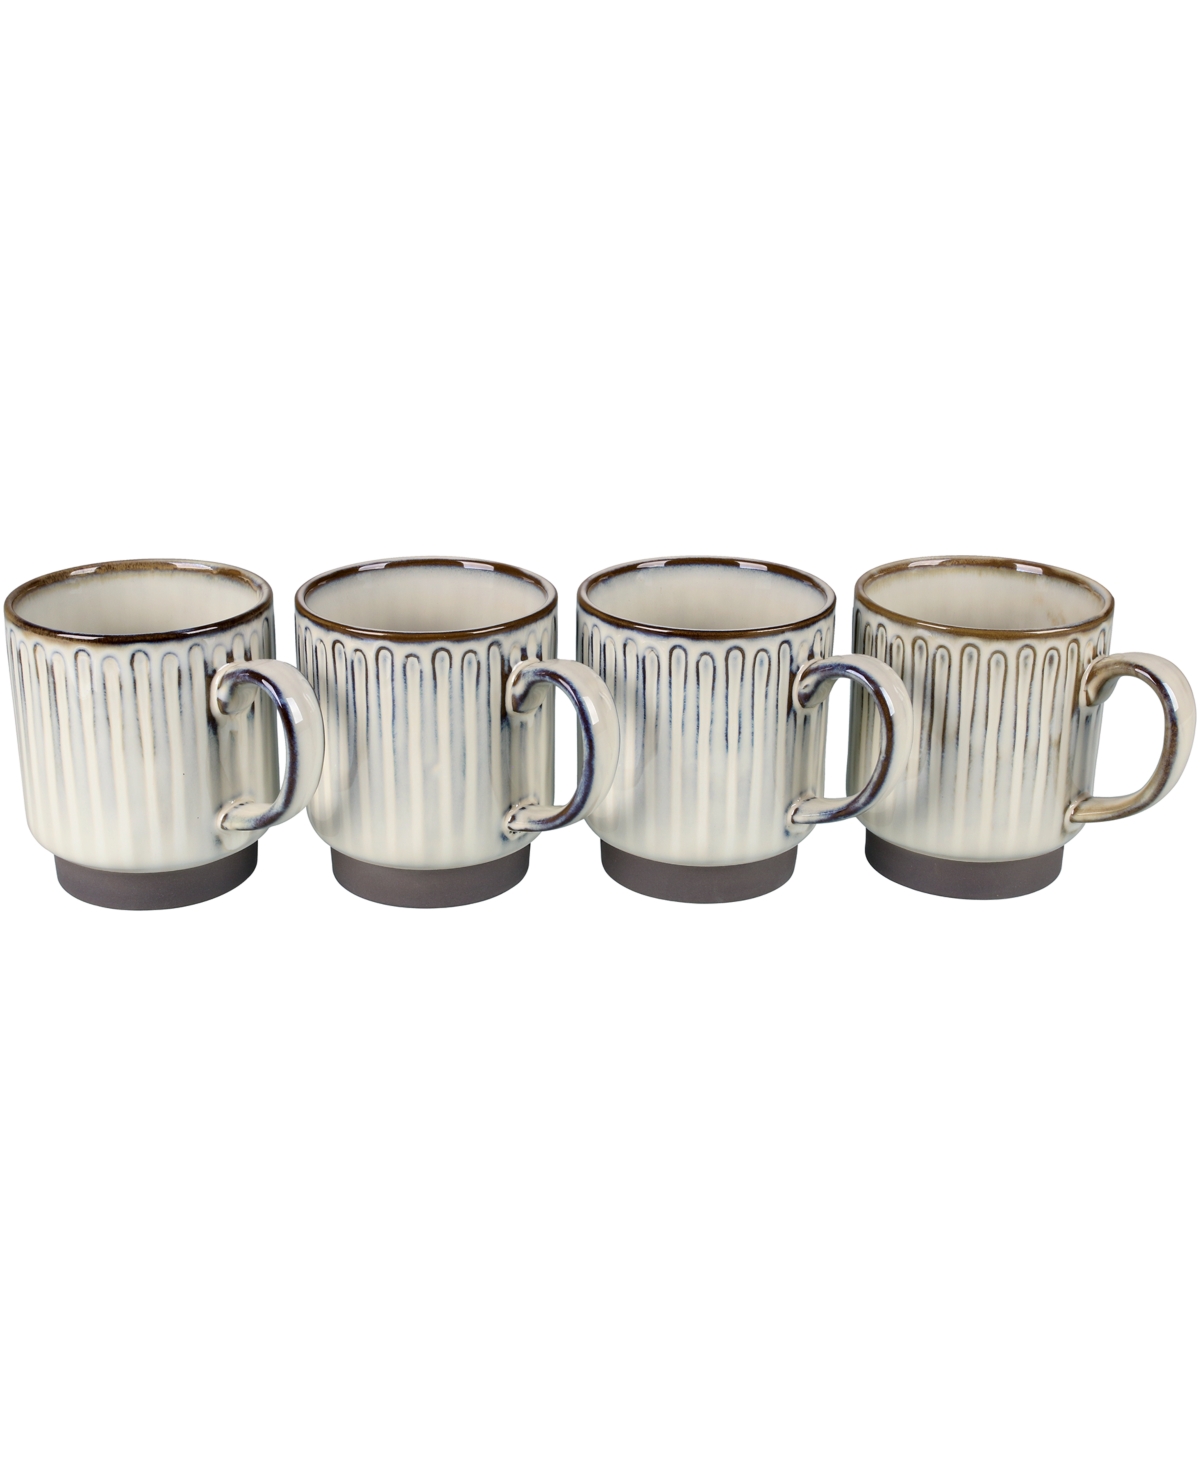 Bia Cordon Bleu Colonnade Set of Four Mugs, 16 oz